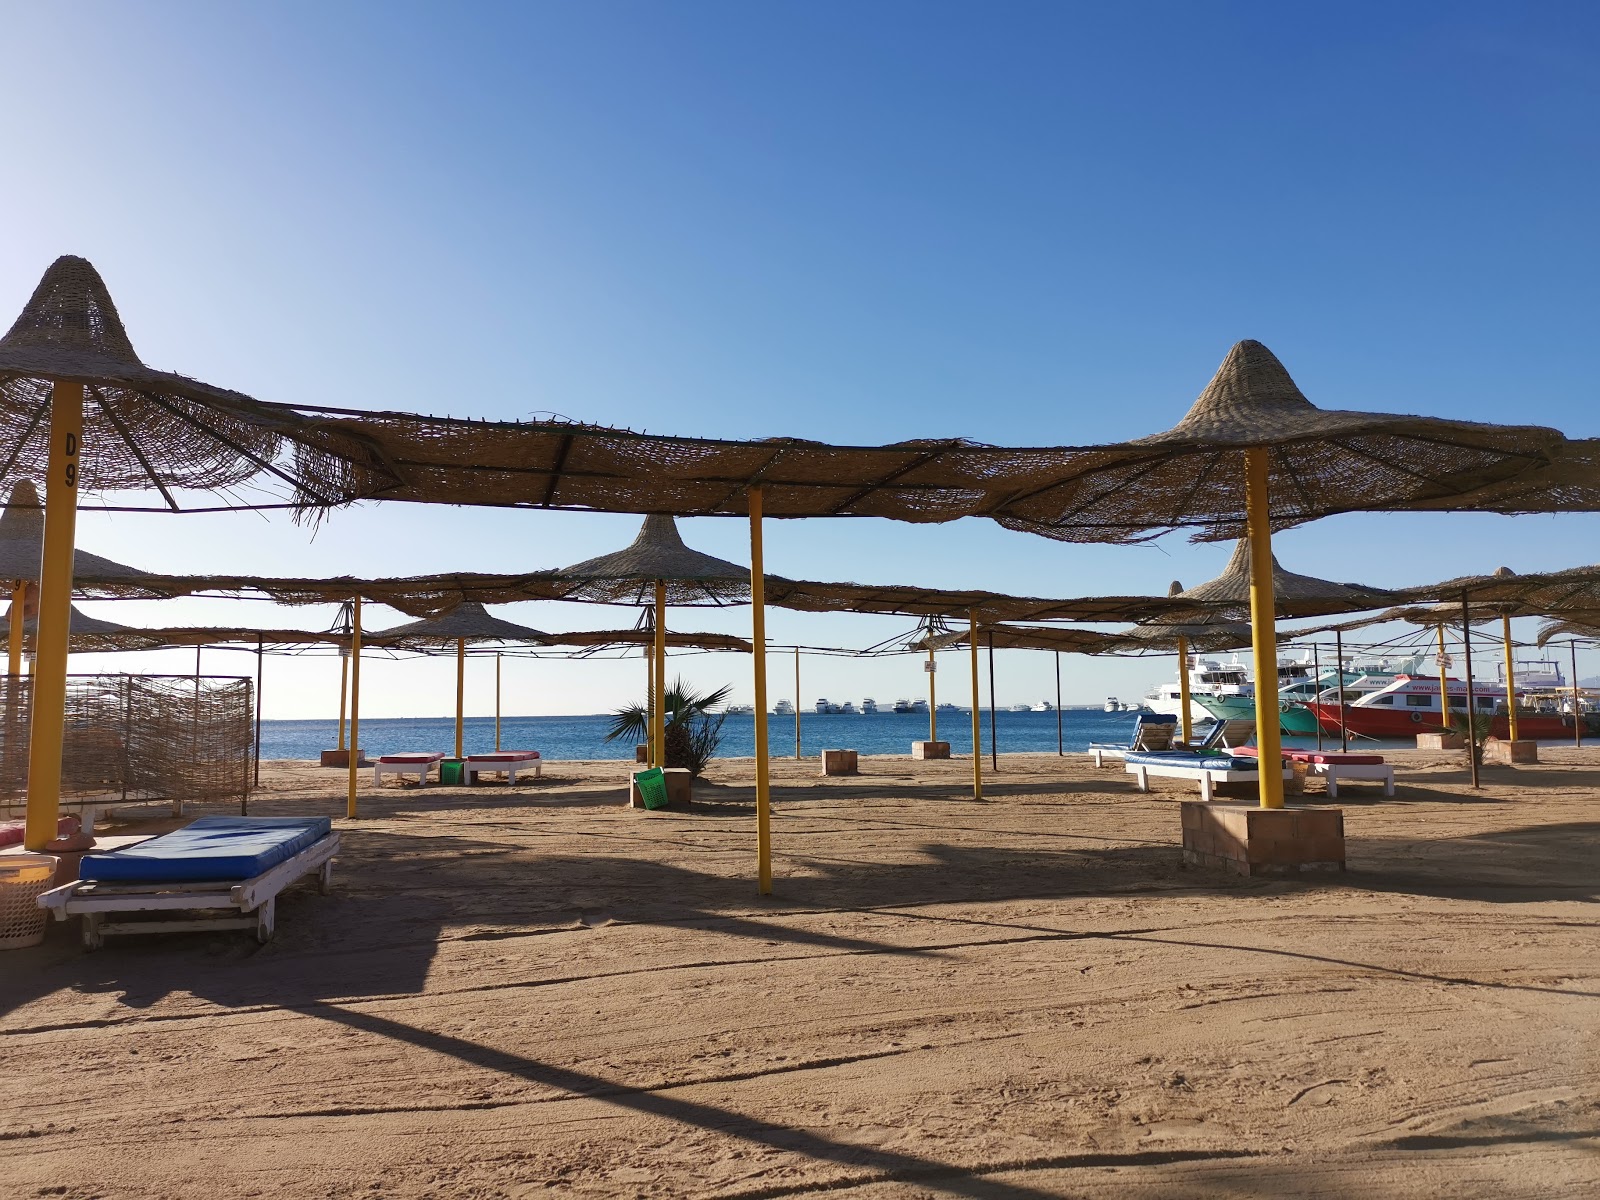 Fotografie cu White Beach Resort - locul popular printre cunoscătorii de relaxare